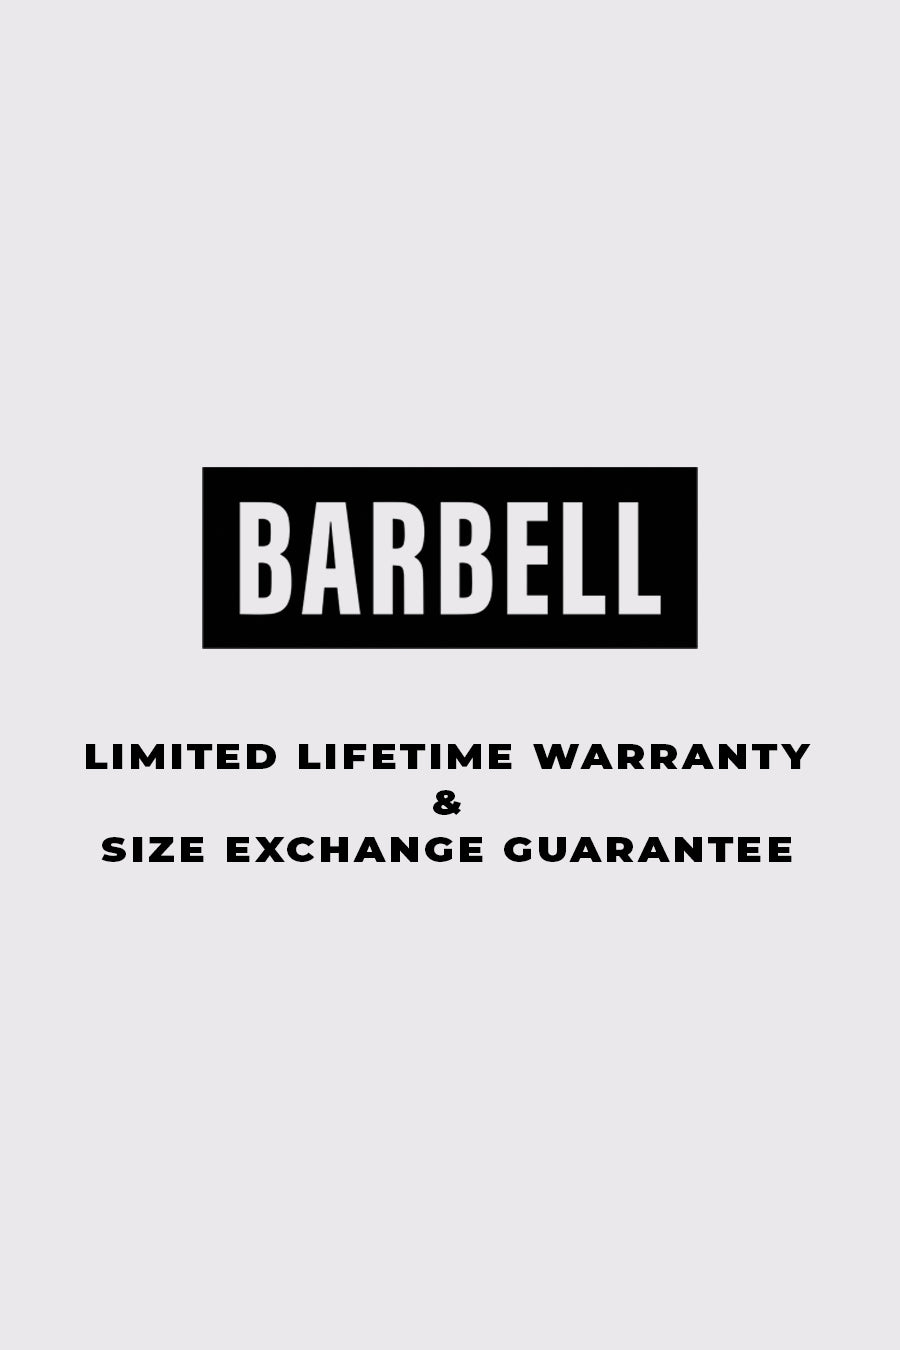 Limited Lifetime Warranty & Size Exchange Guarantee